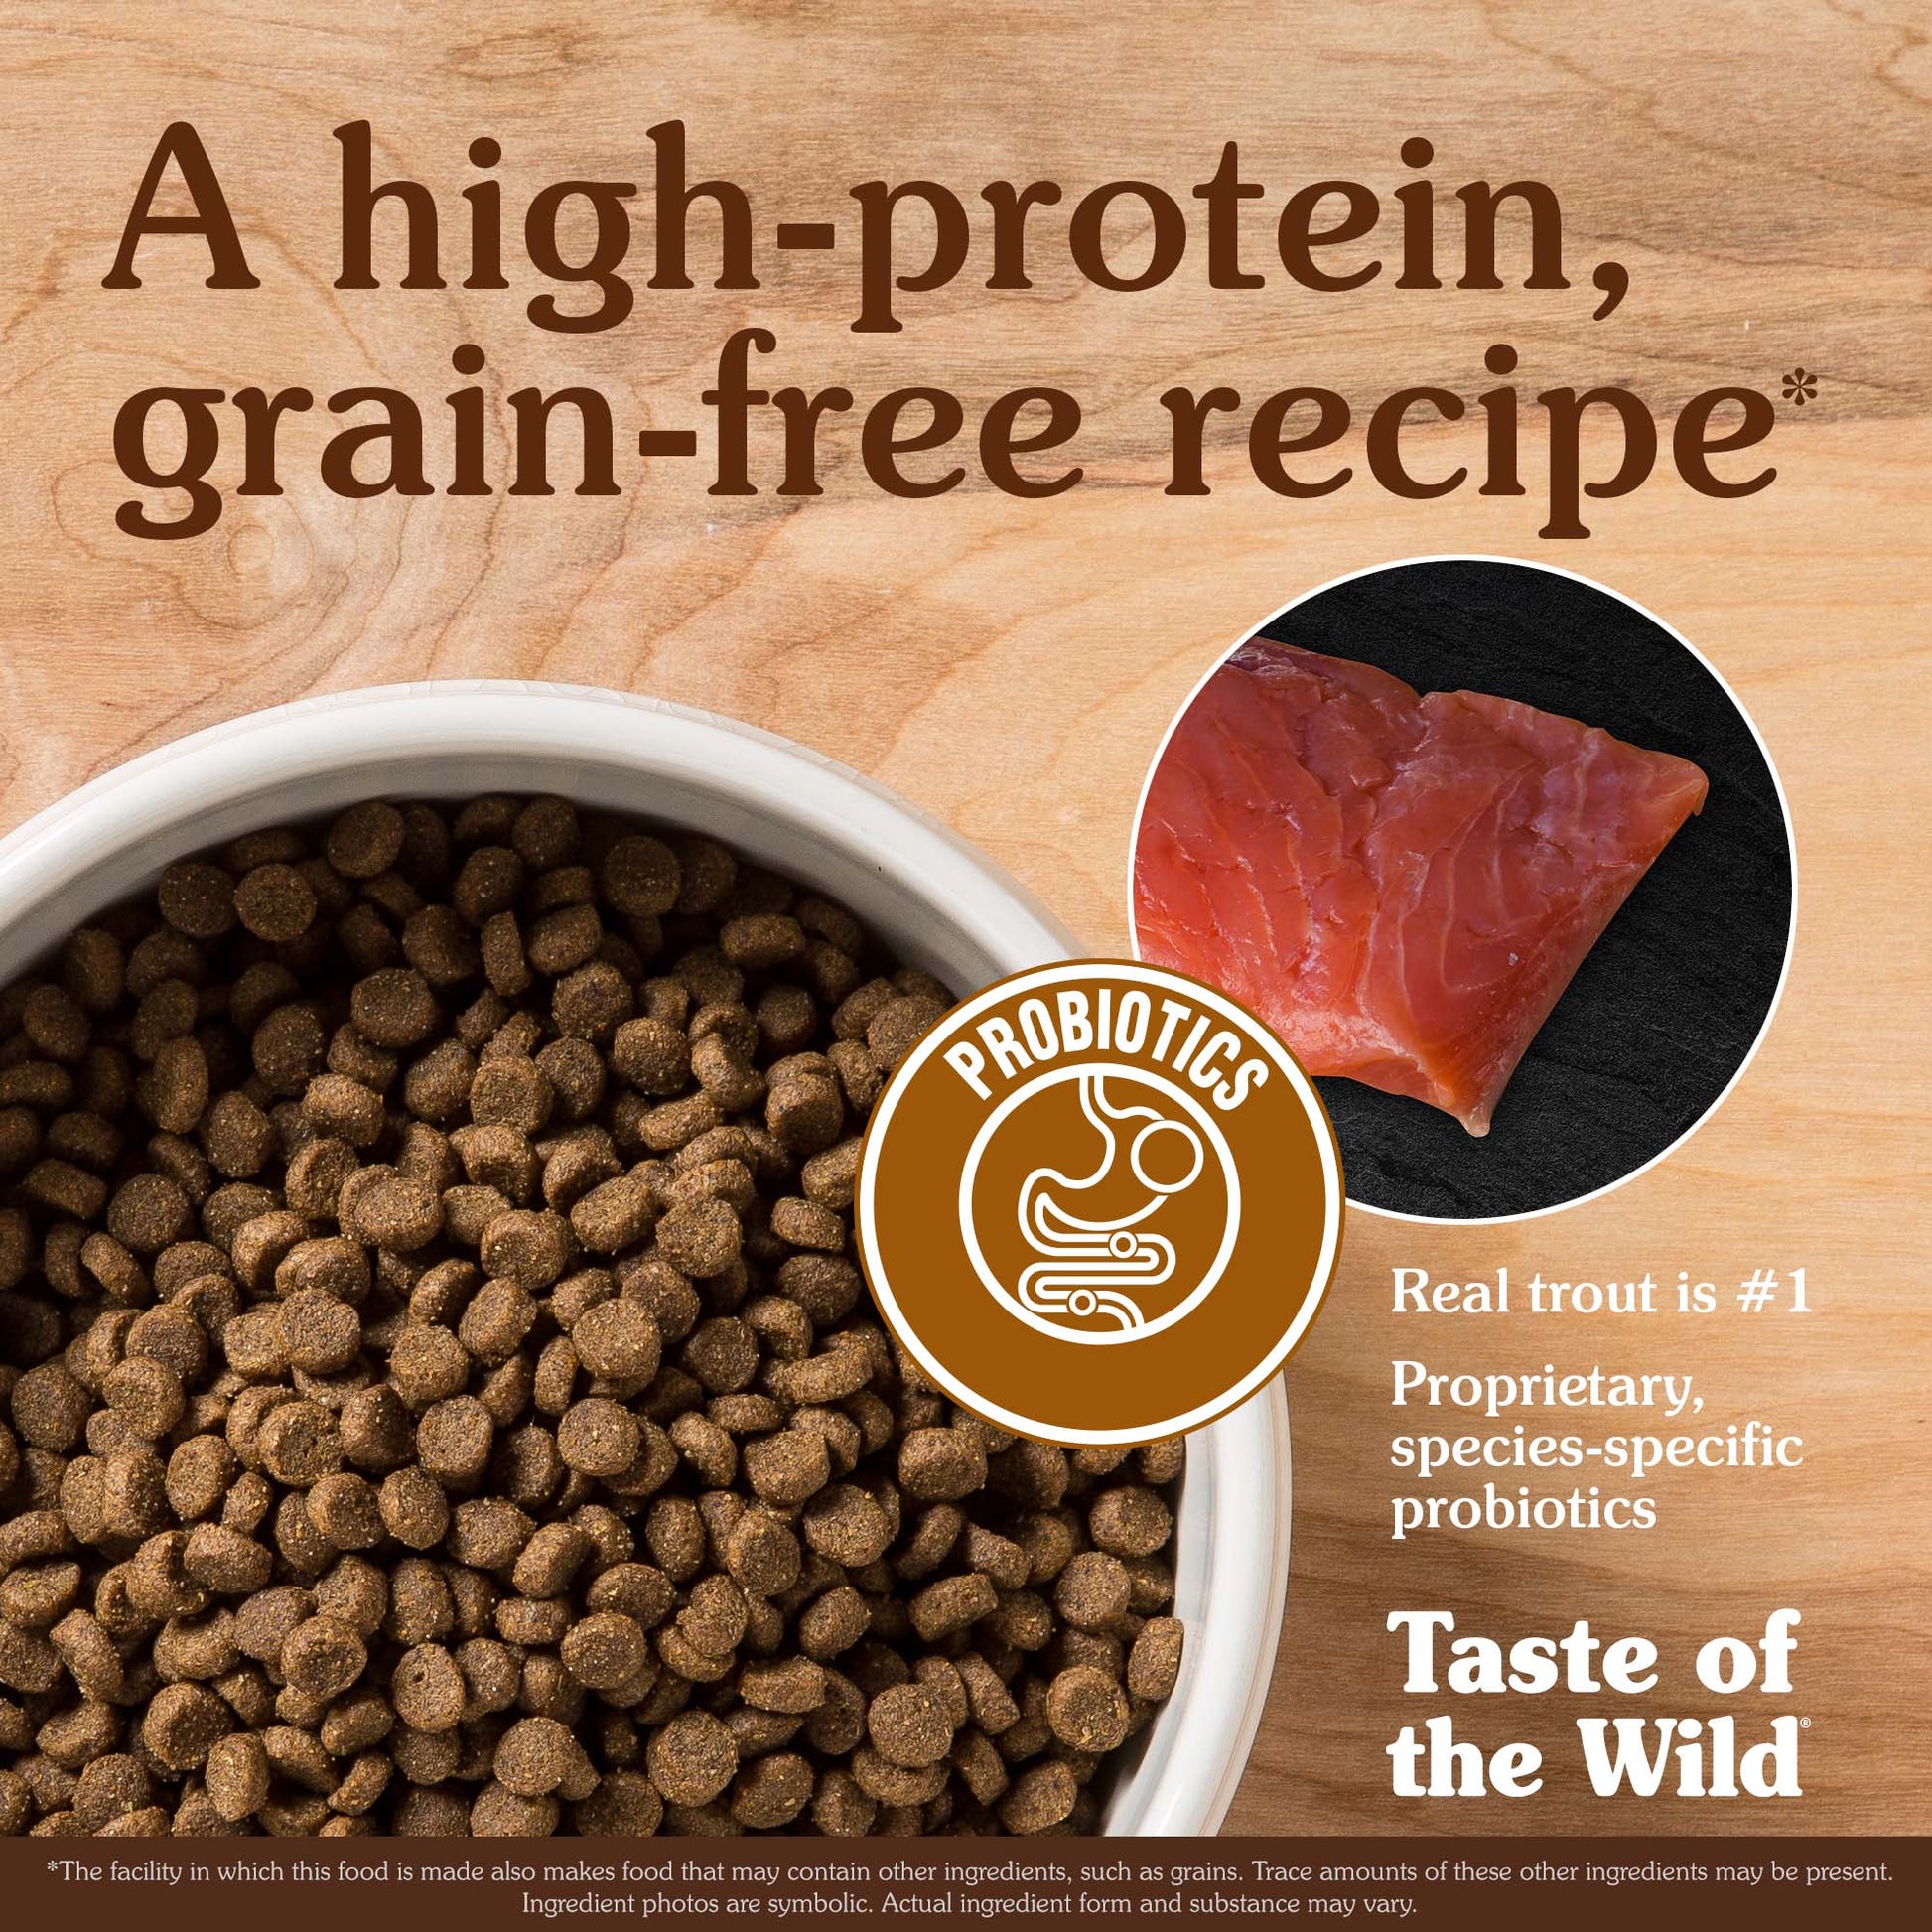 Taste of the Wild Canyon River Feline Recipe - Pet Merit StoreTaste of the Wild Canyon River Feline Recipe